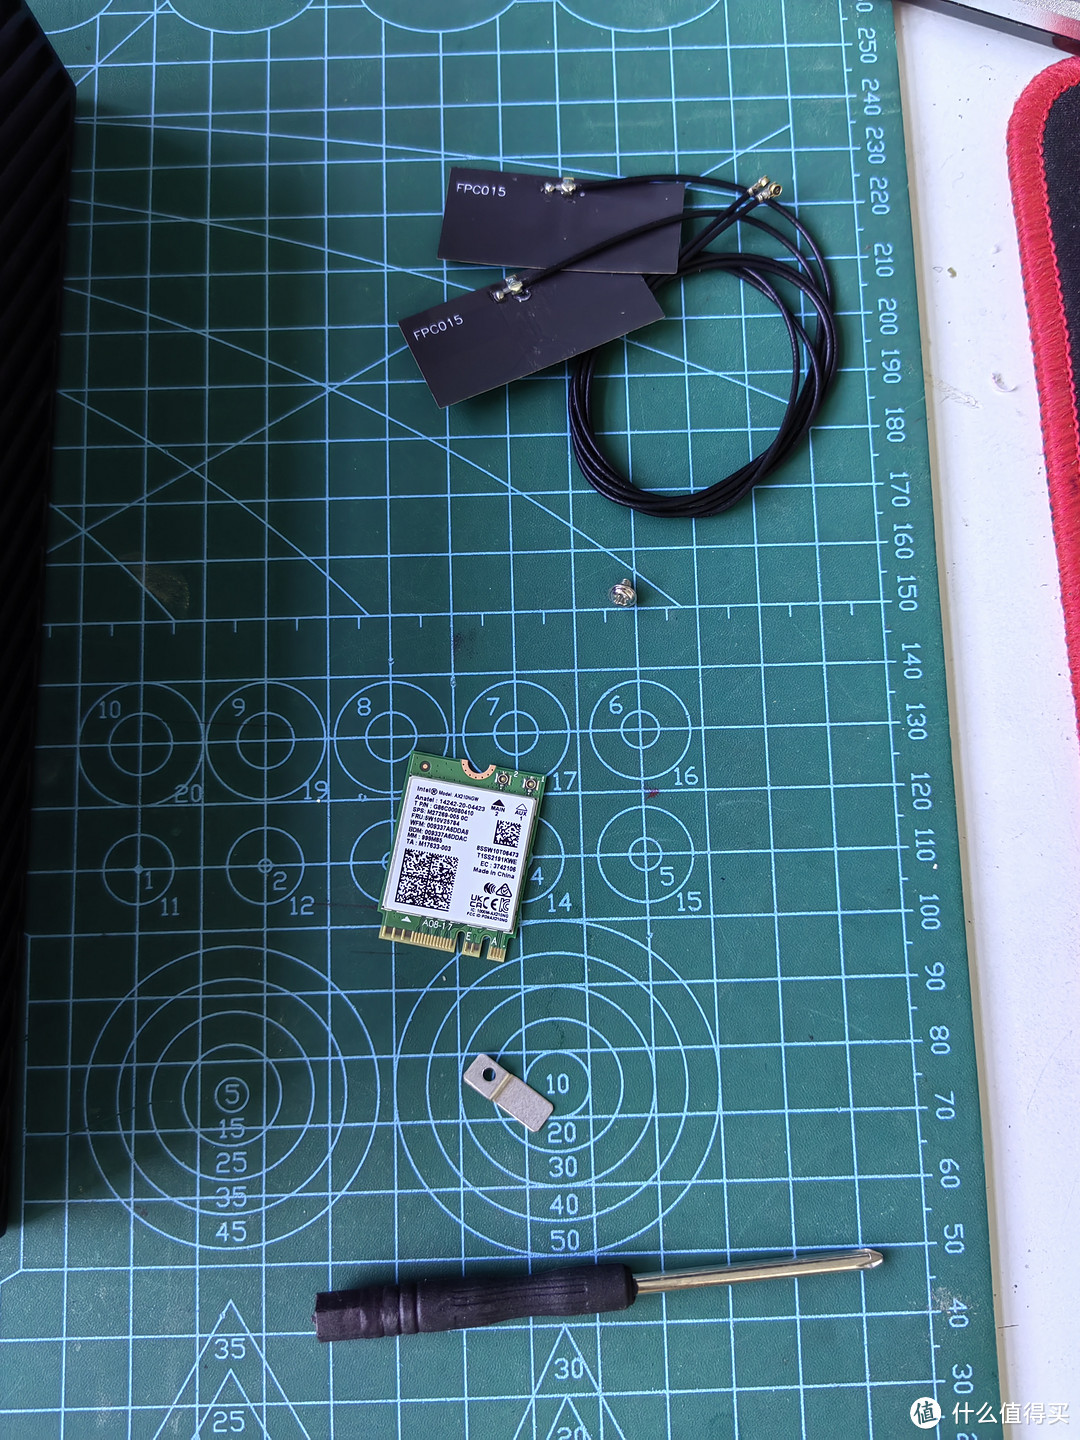 AX210网卡，带一个压片，可以固定IPX扣